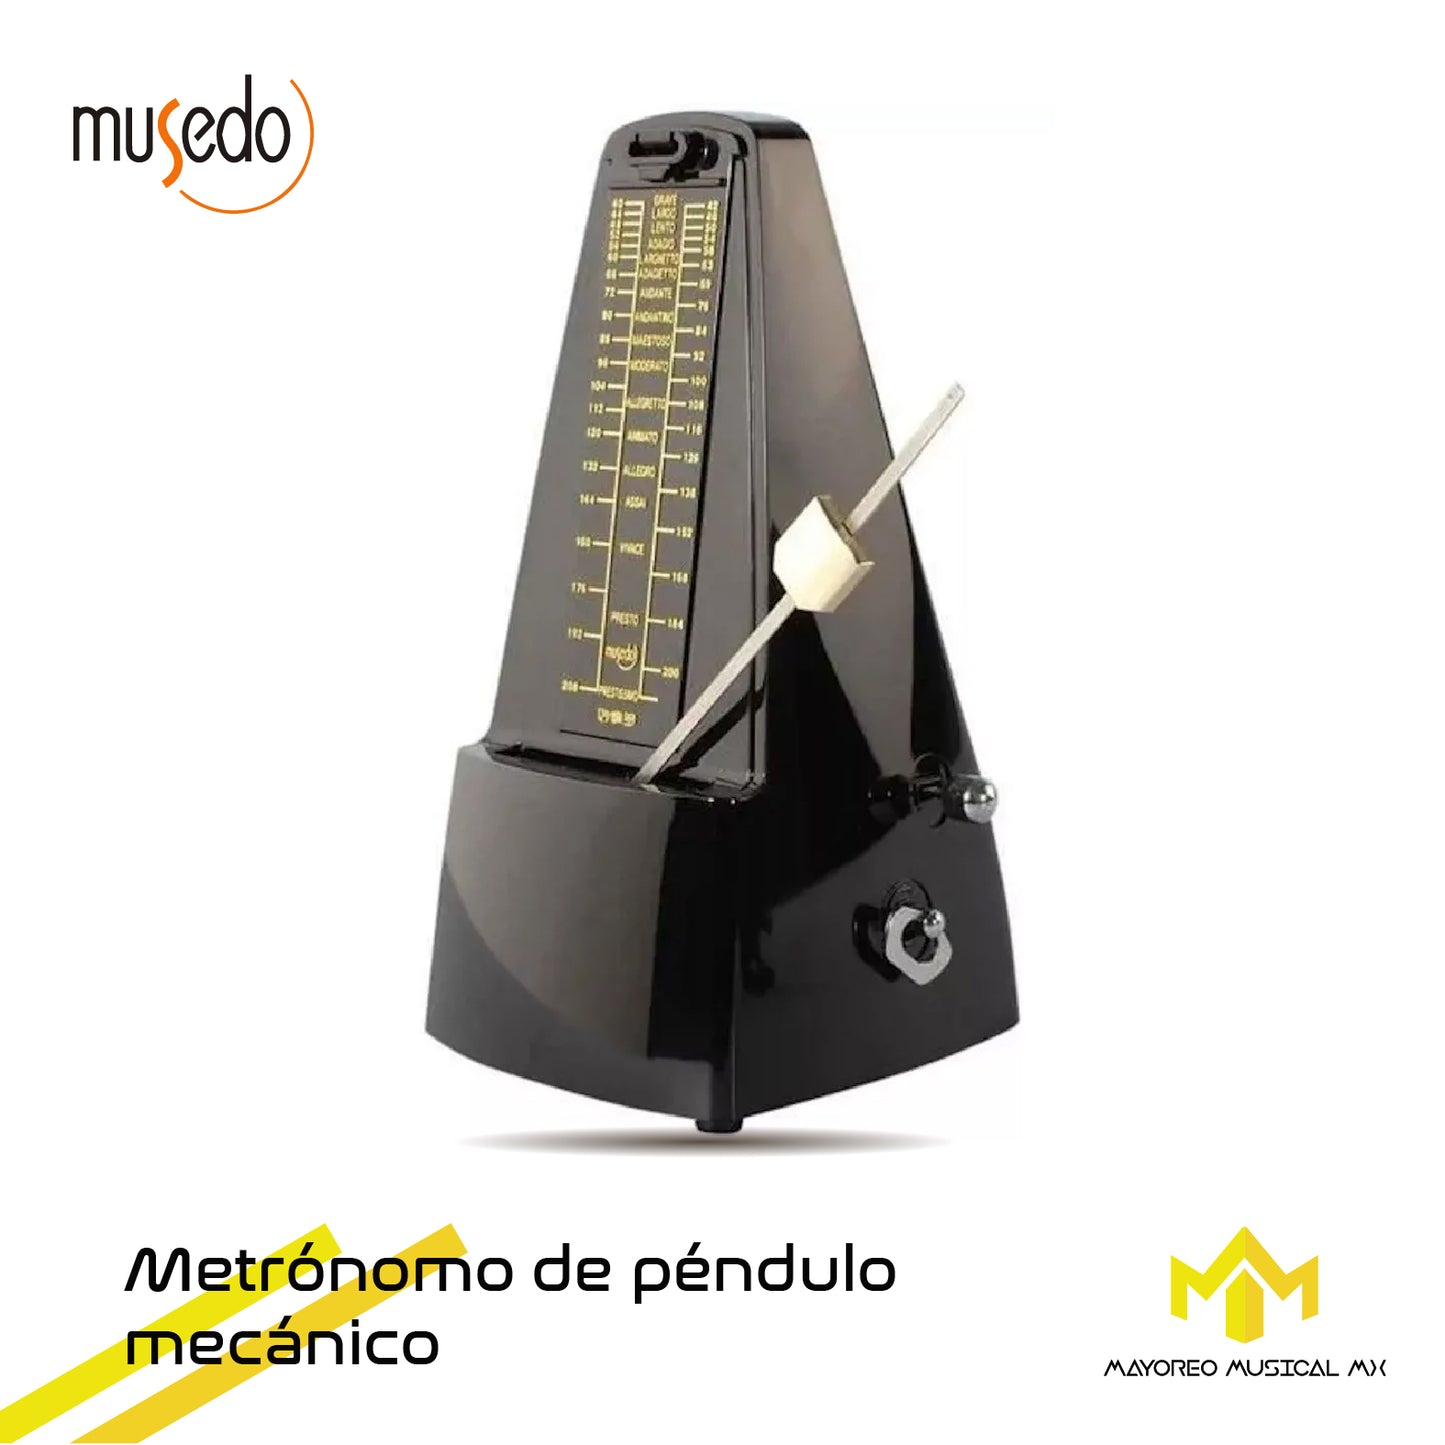 Metronomo de Pendulo Mecanico Musedo M-20